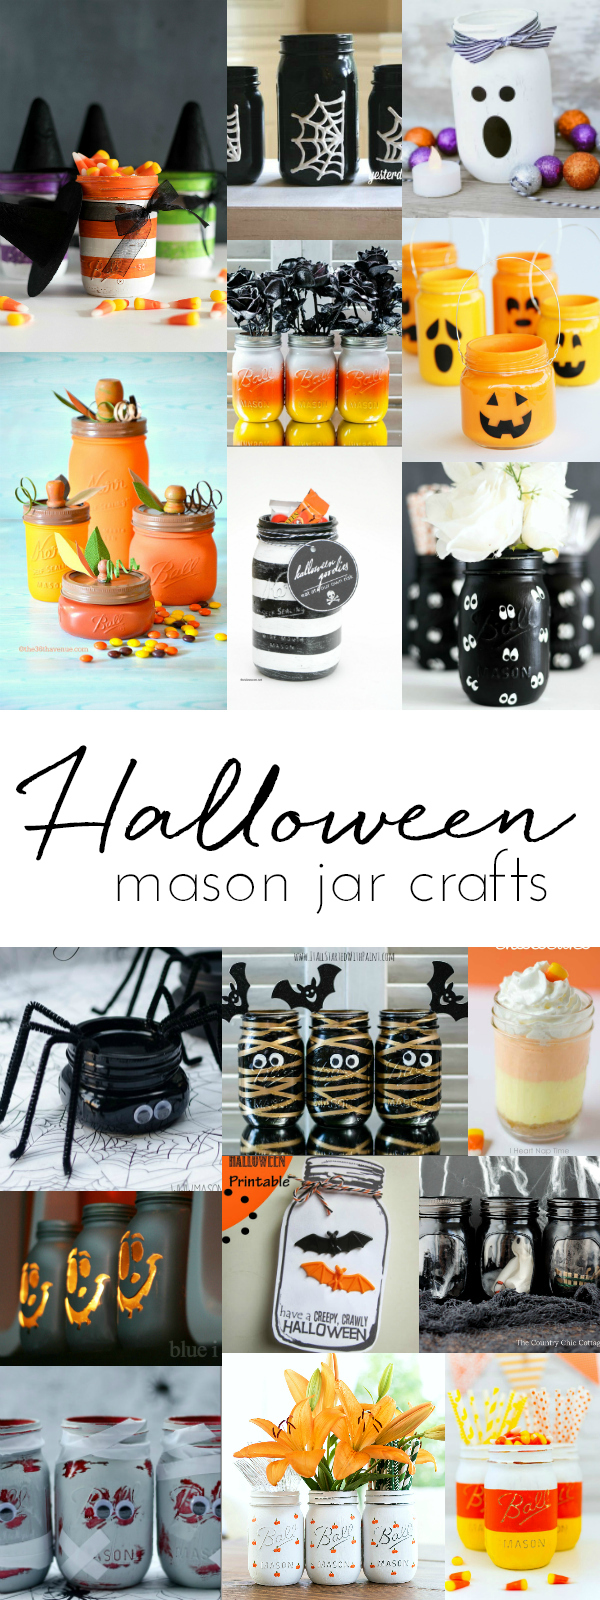 Halloween Crafts with Mason Jars - Mason Jar Crafts for Halloween - Halloween Kids Craft Ideas